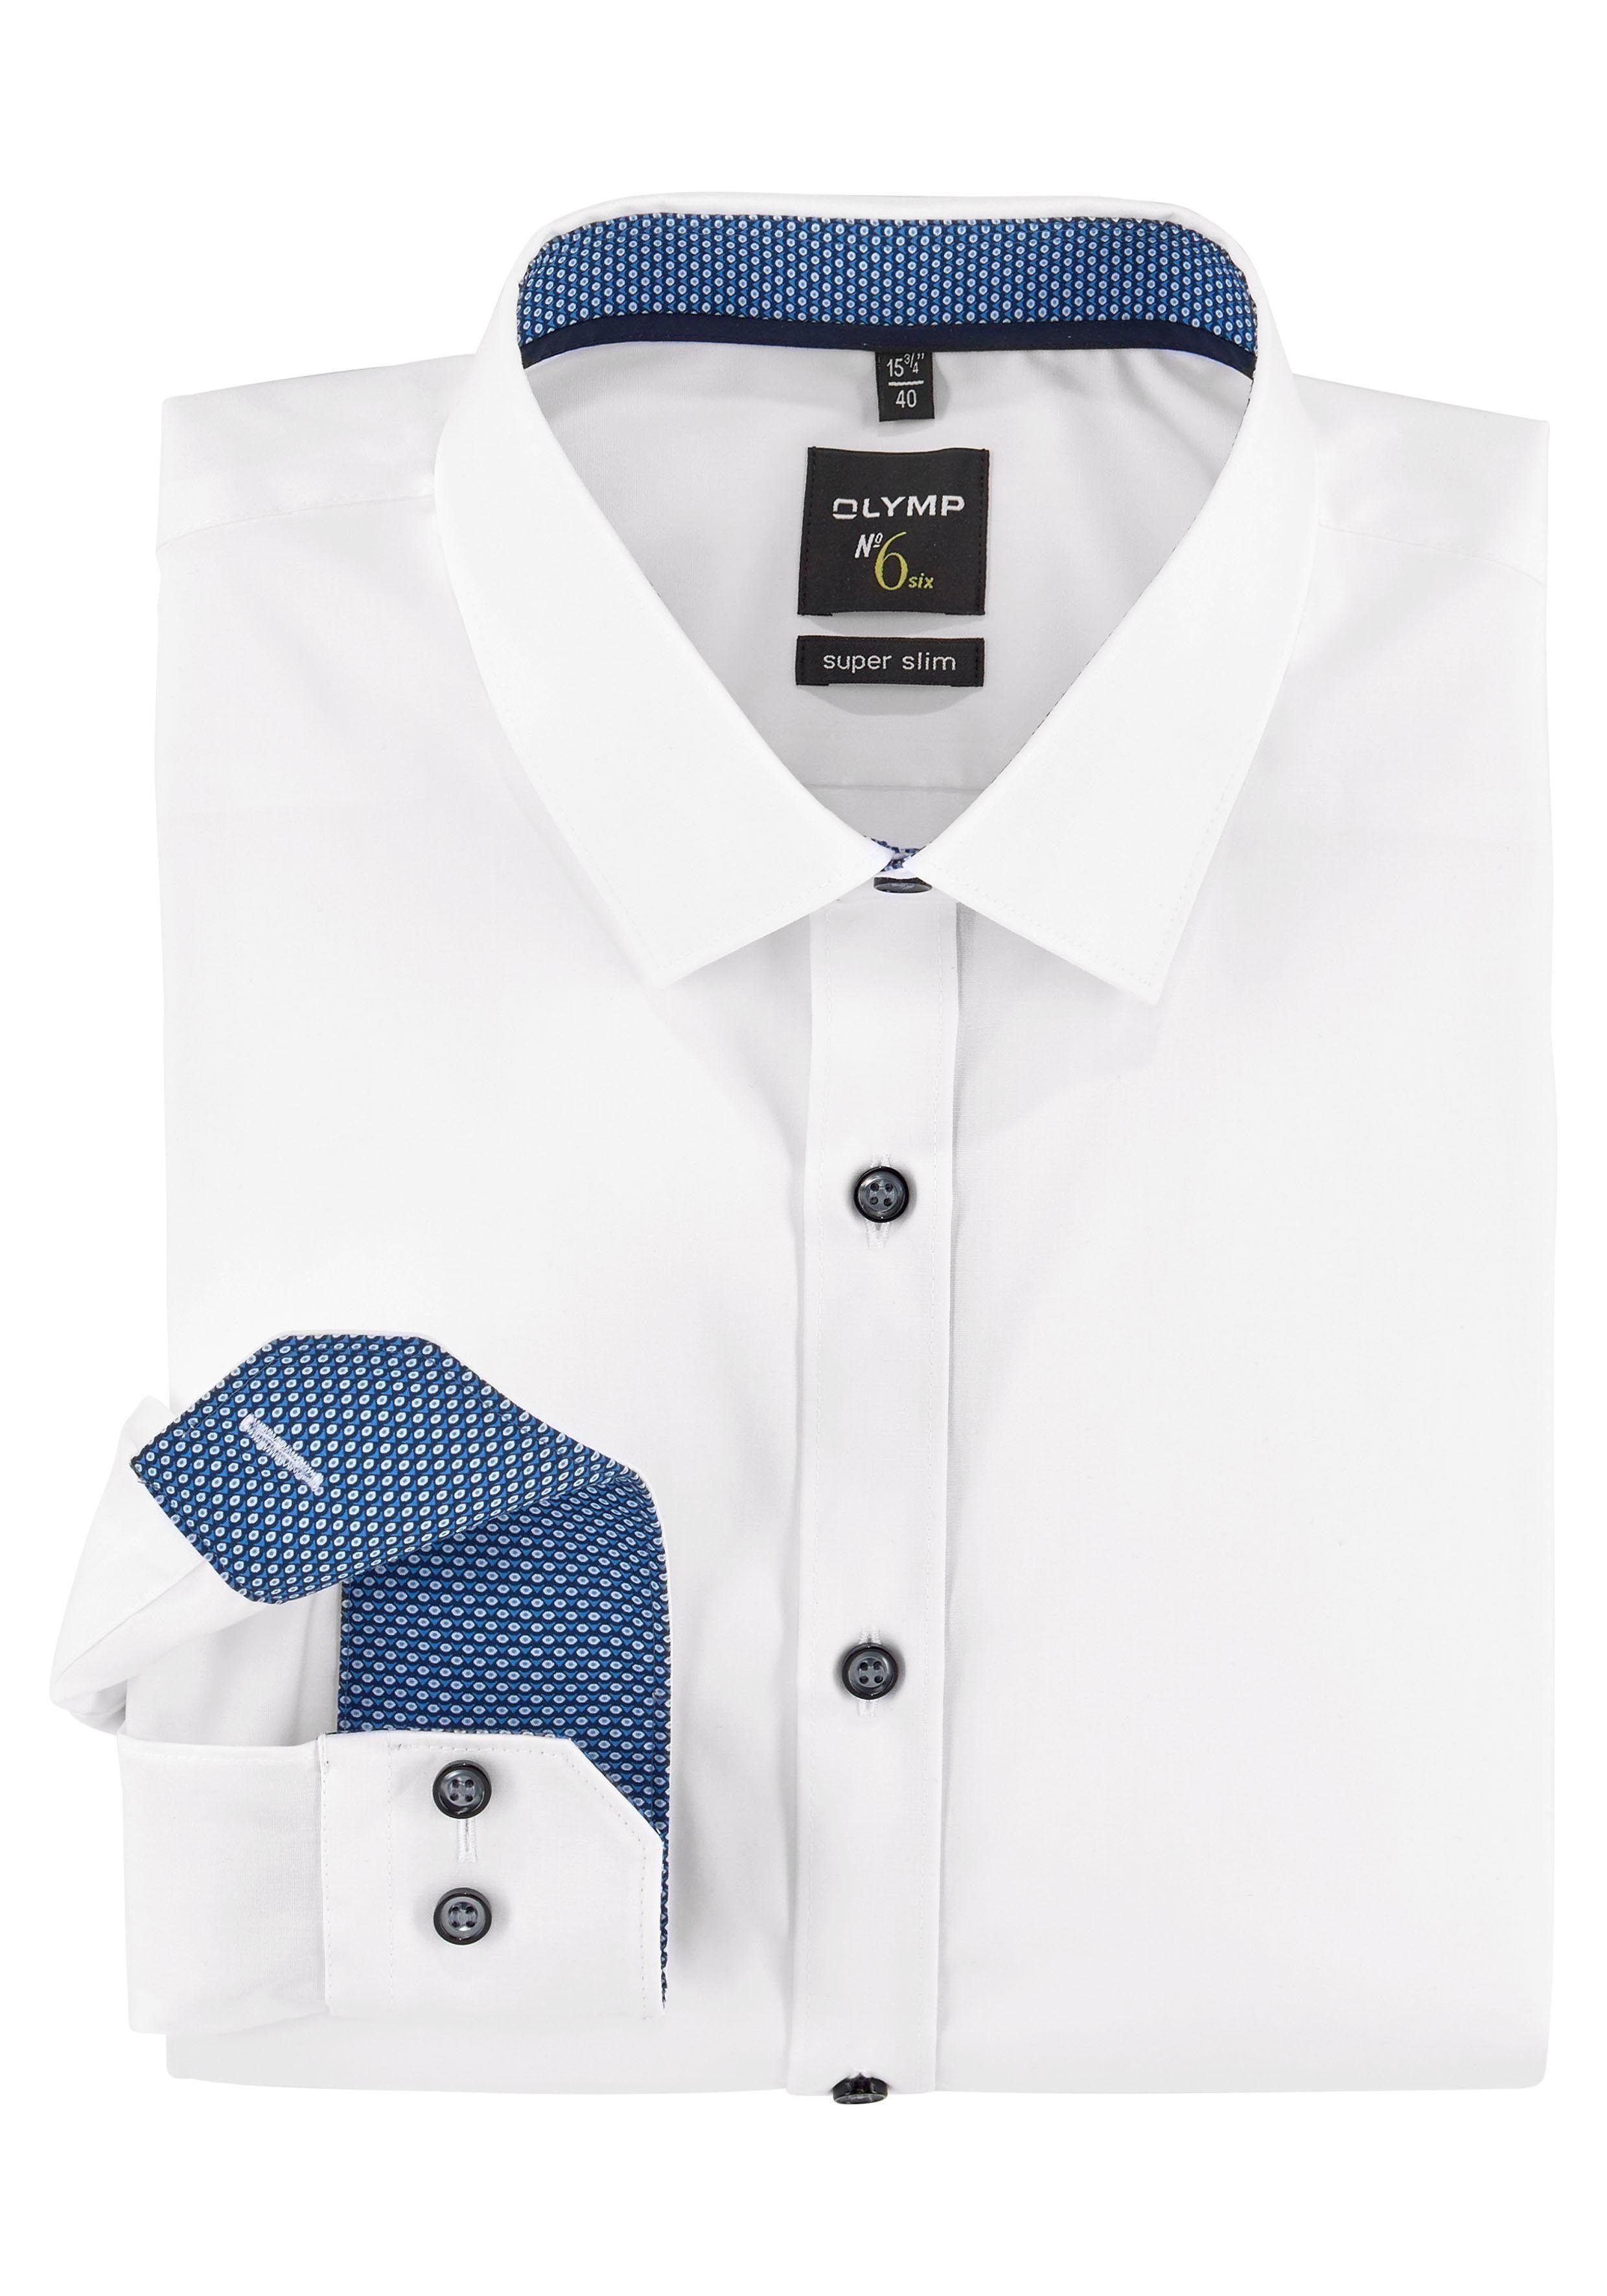 Six weiß-blau-kontrastfarbene Businesshemd super slim No. OLYMP Details